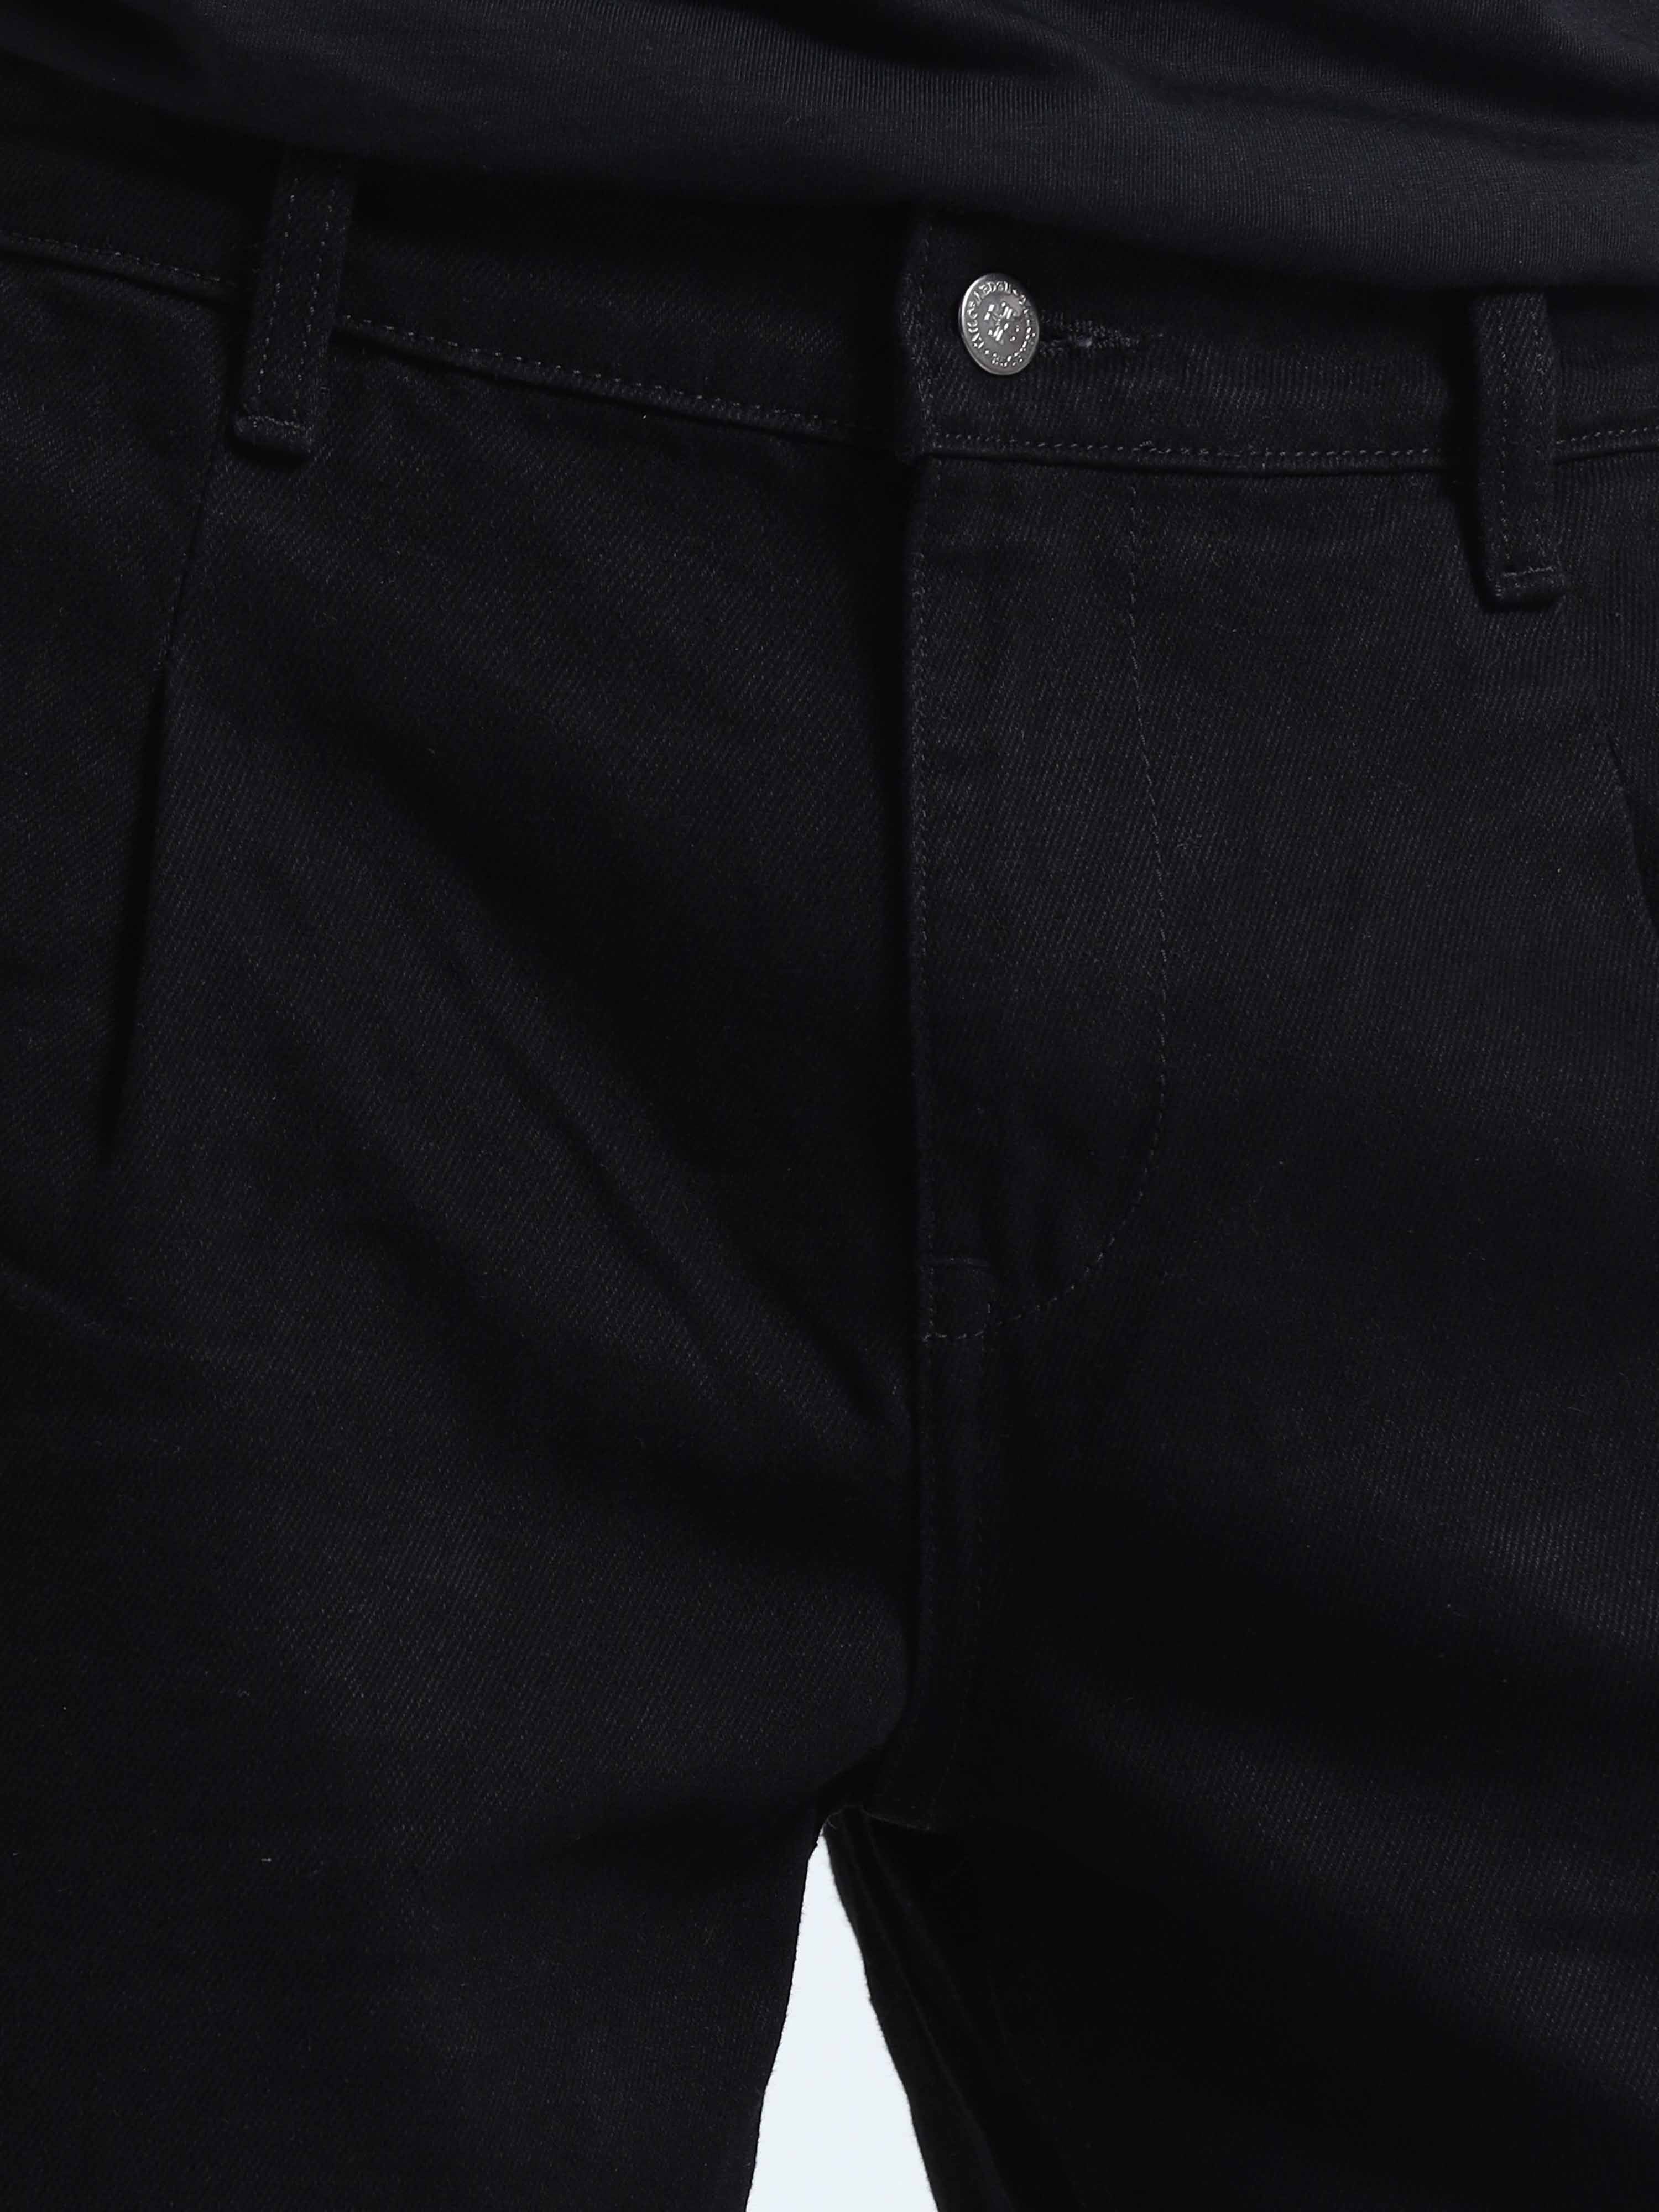 Gubotare Mens Jeans Trousers Fashion Ripped Men's Oversized Jeans Men's  pants (Black, L) - Walmart.com